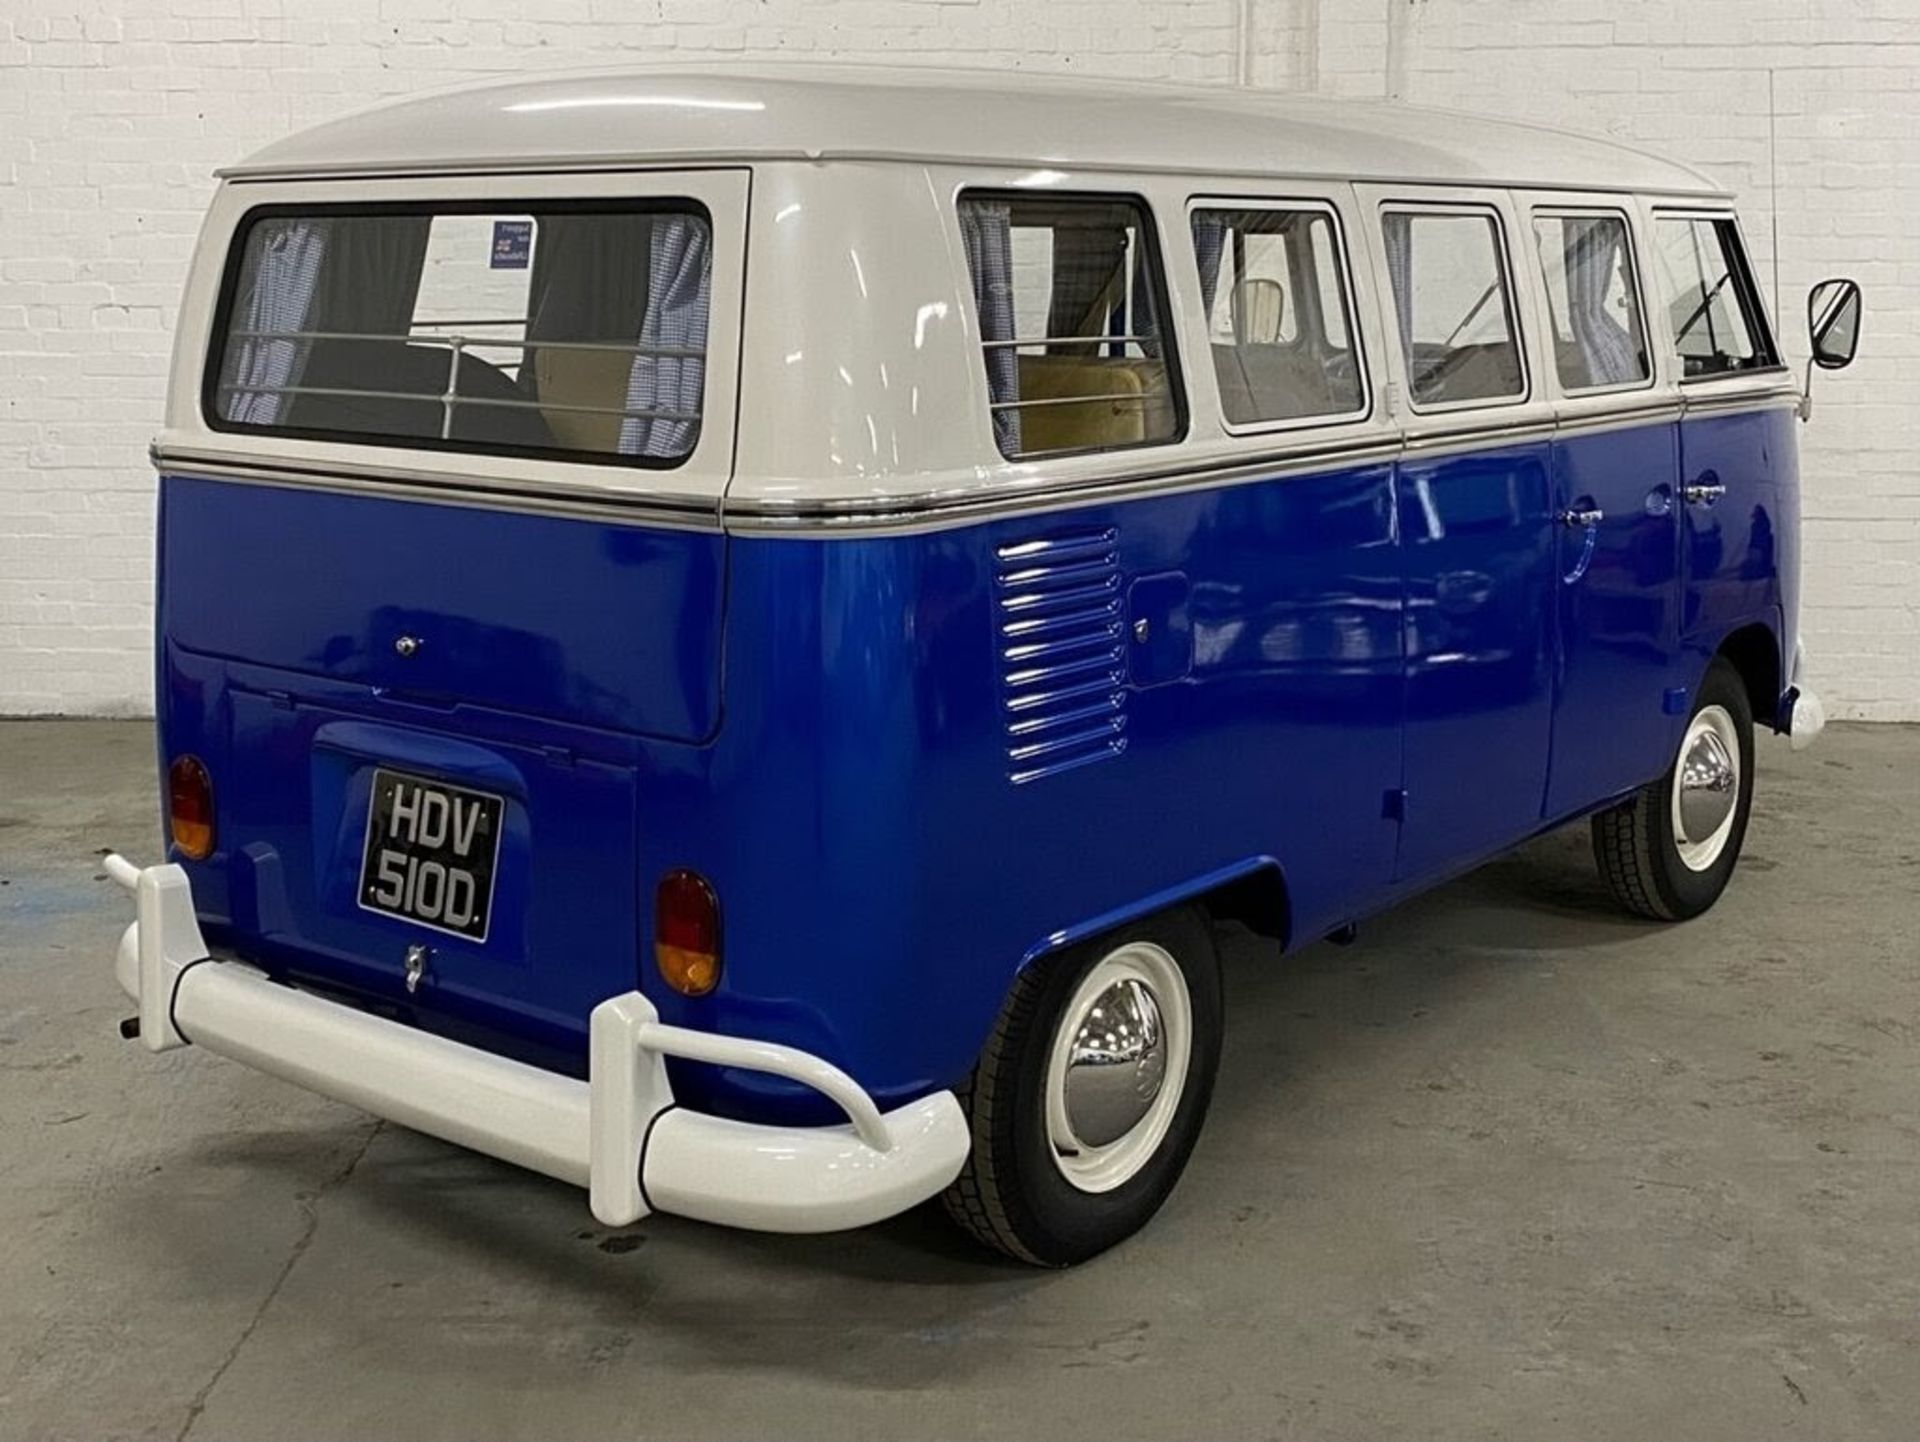 1966 VW 13 Window Deluxe Splitscreen Campervan Registration number HDV 510D Chassis number 256174614 - Image 5 of 25